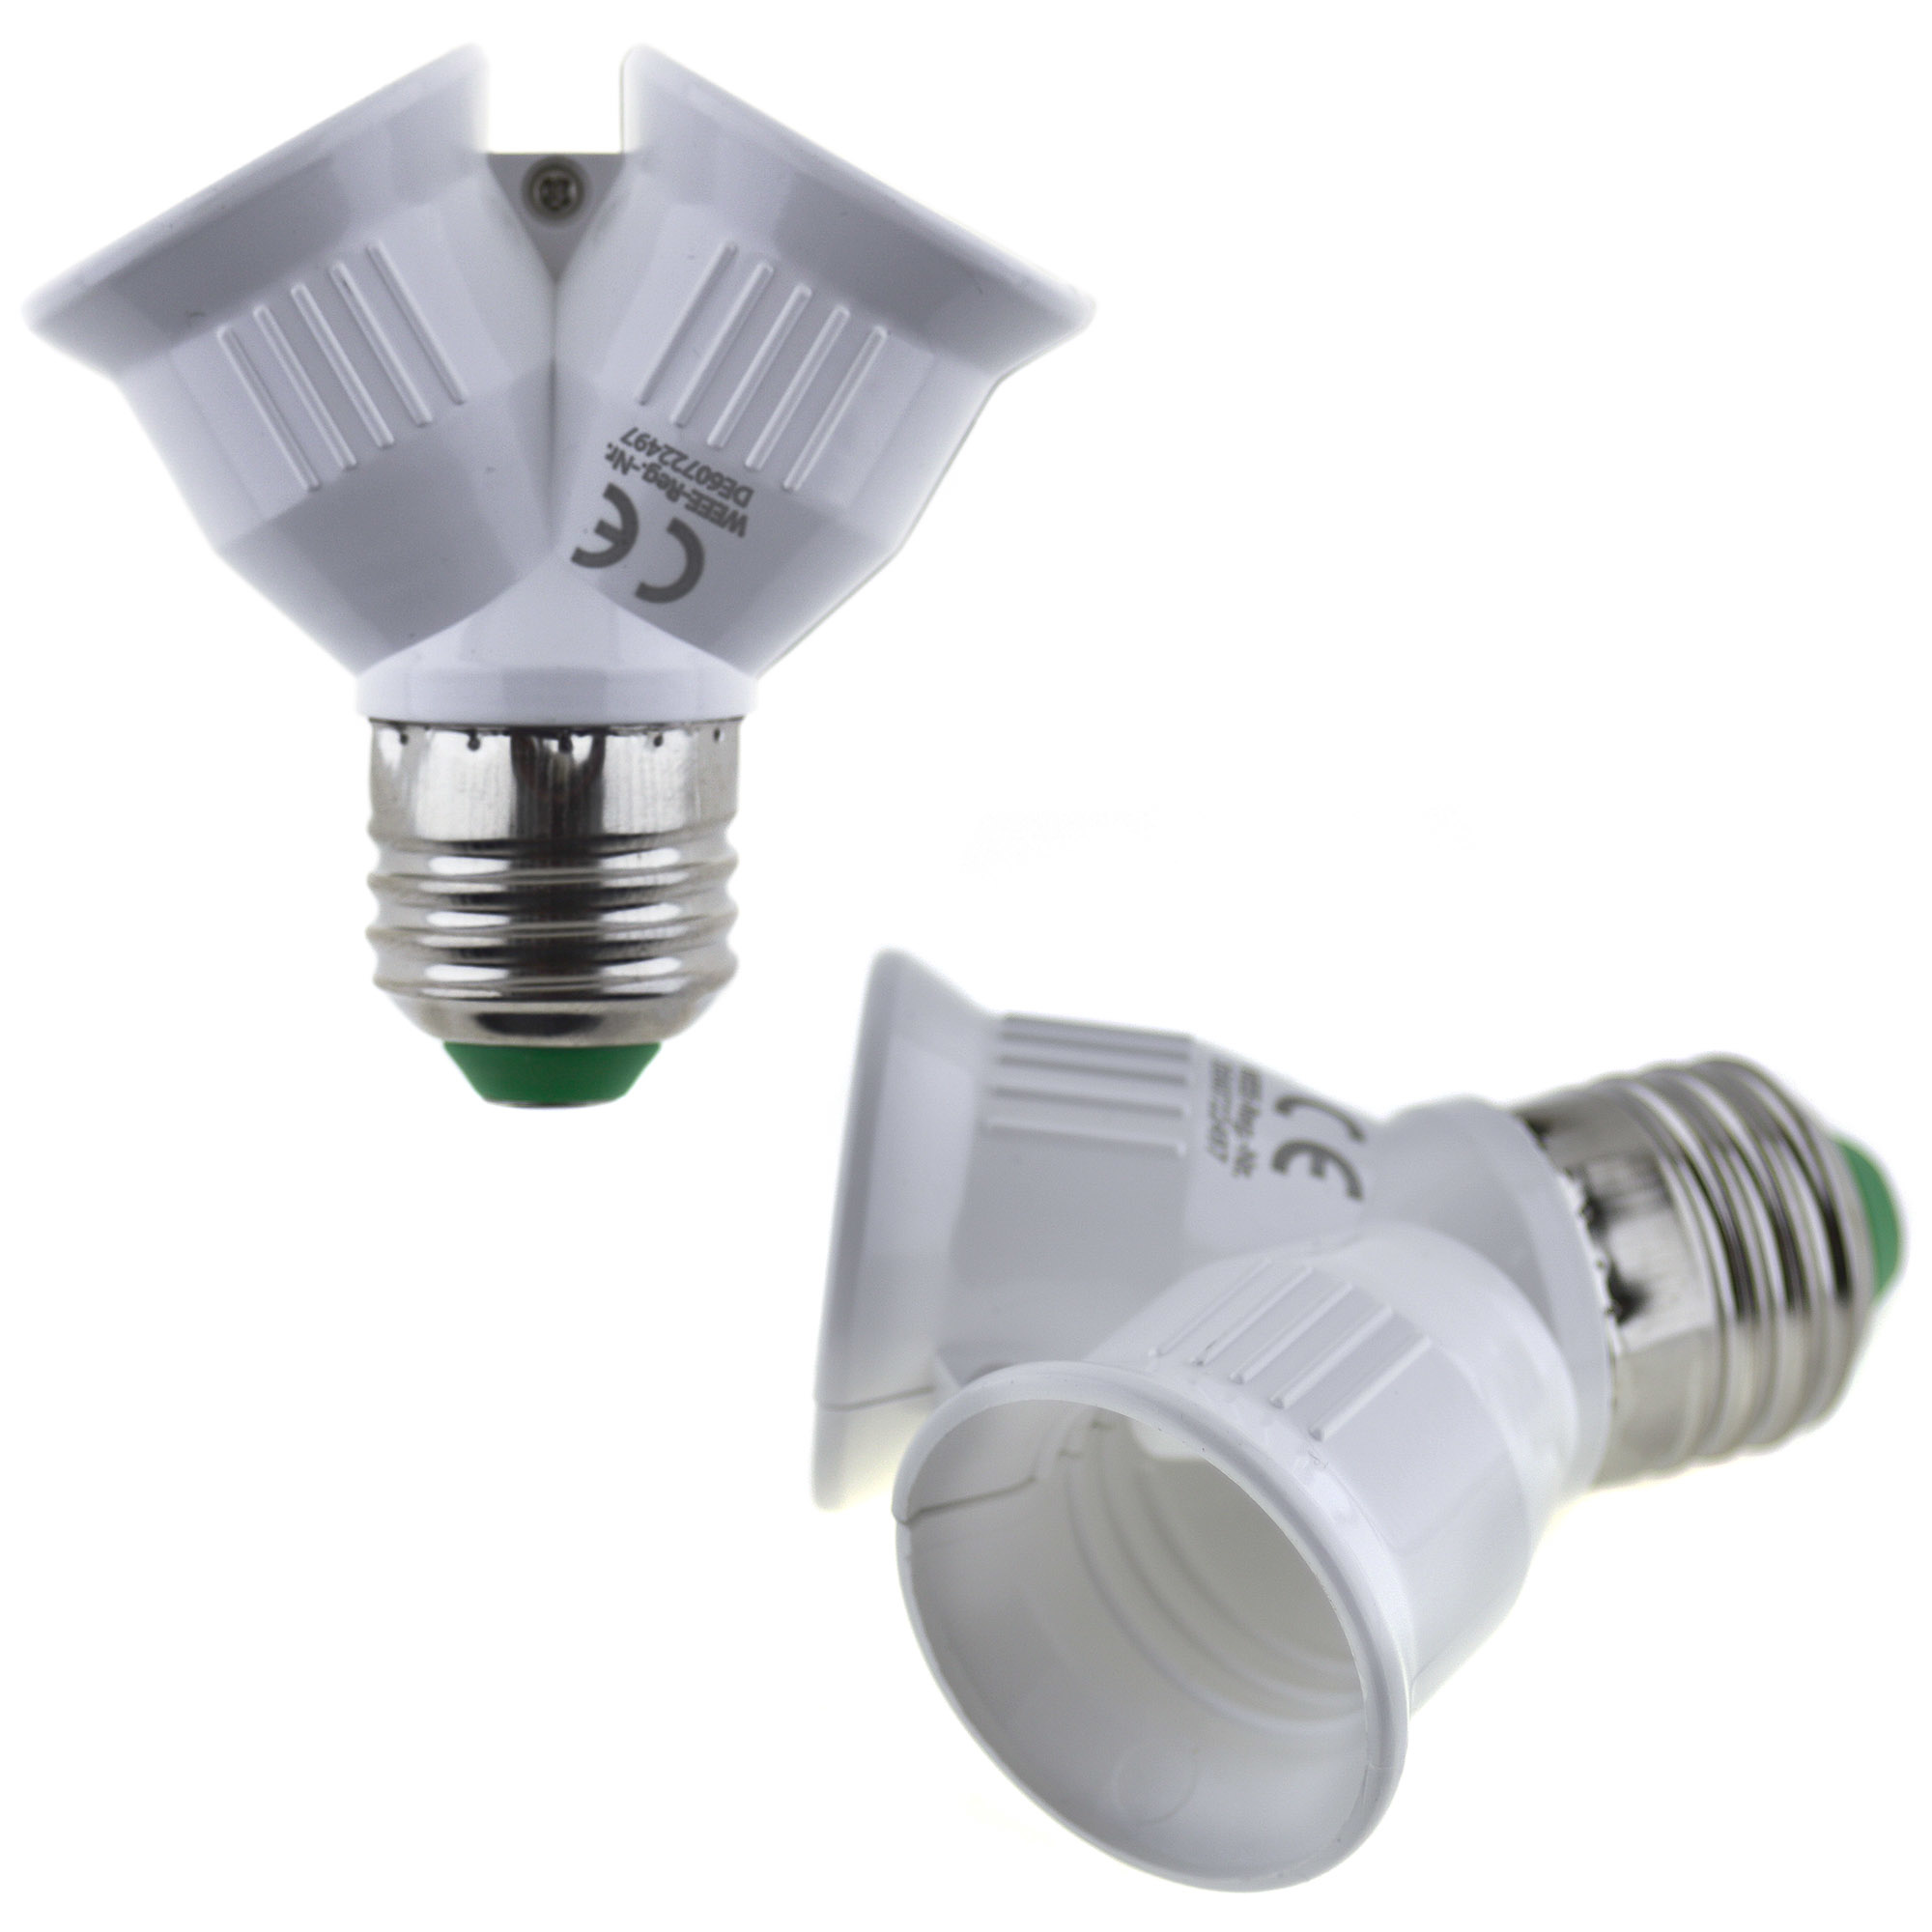 Lamp socket adaptor E27 to 2x E27 - 2PCS